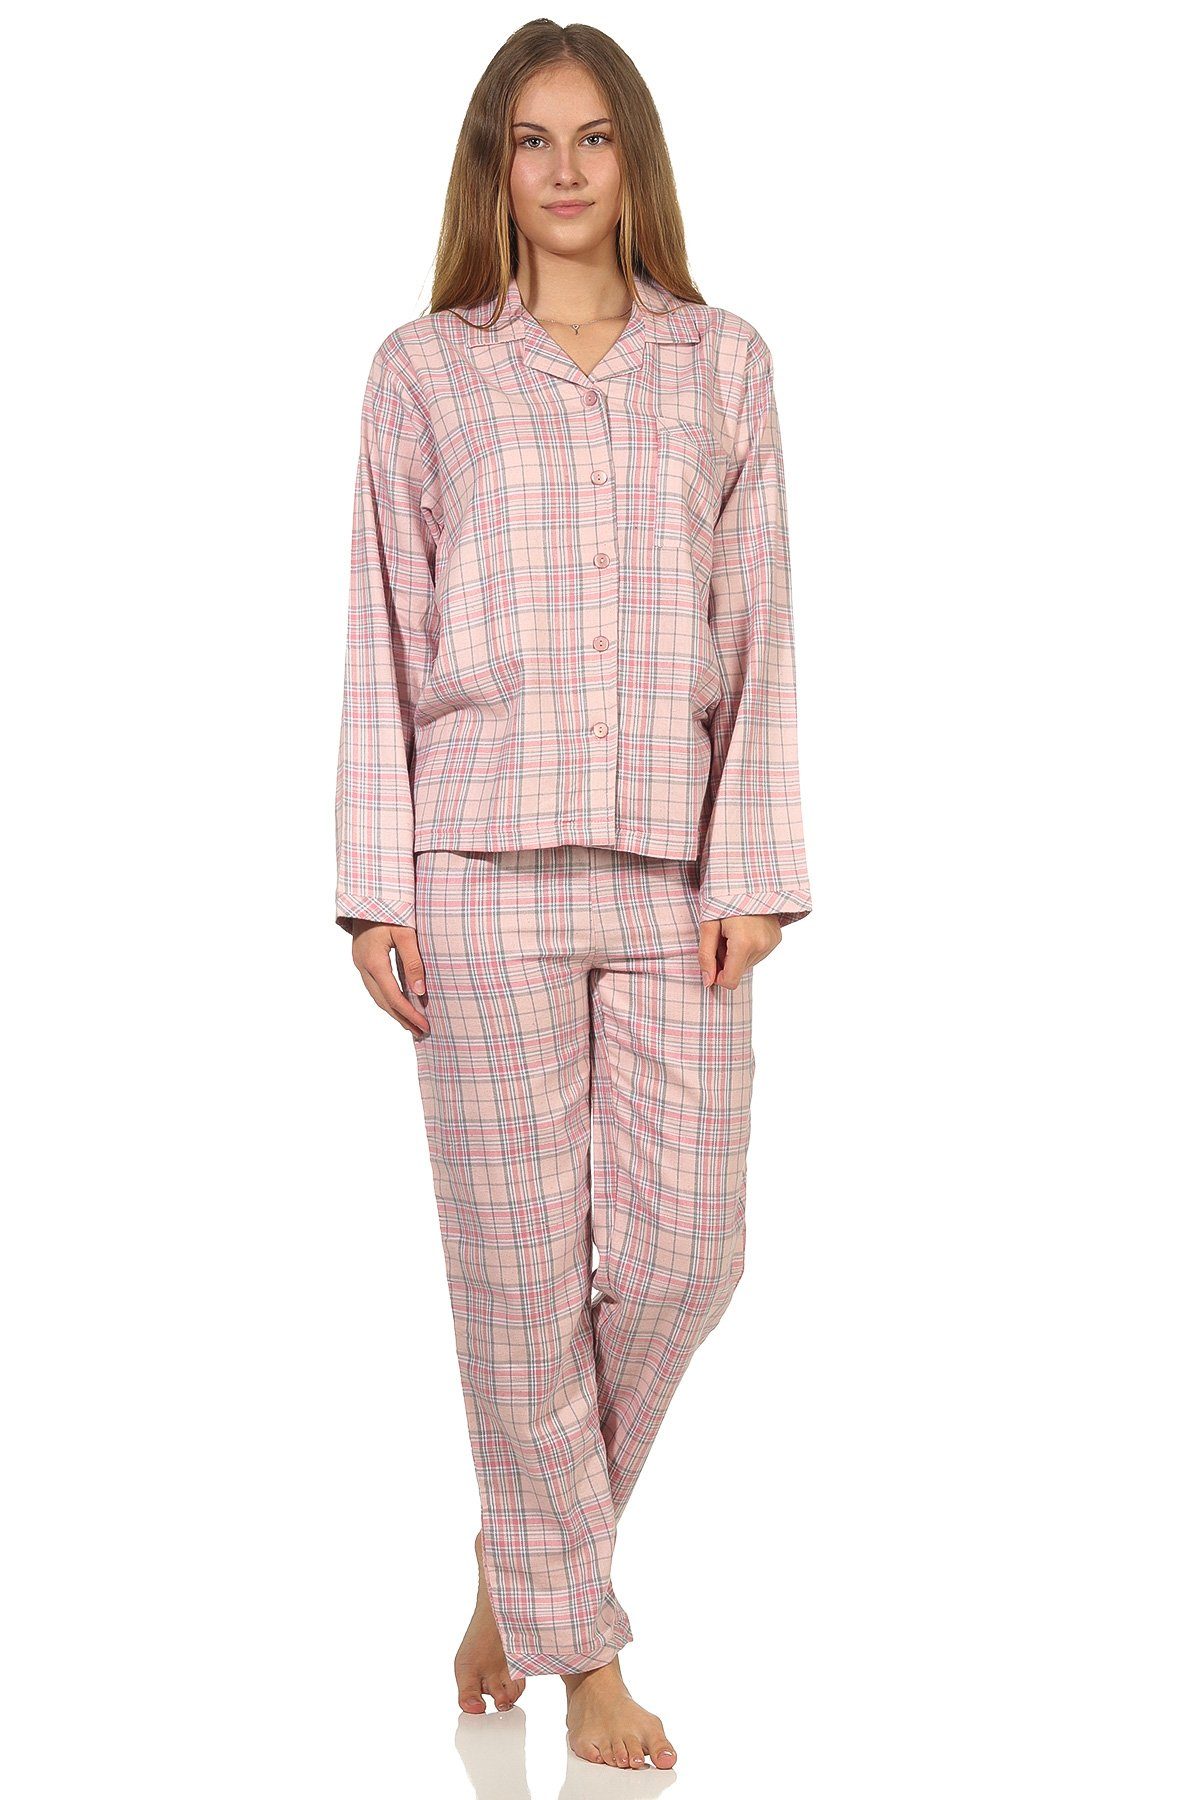 Wäsche/Bademode Pyjamas Normann Pyjama Damen langarm Flanell Pyjama Schlafanzug kariert - 202 201 15 602